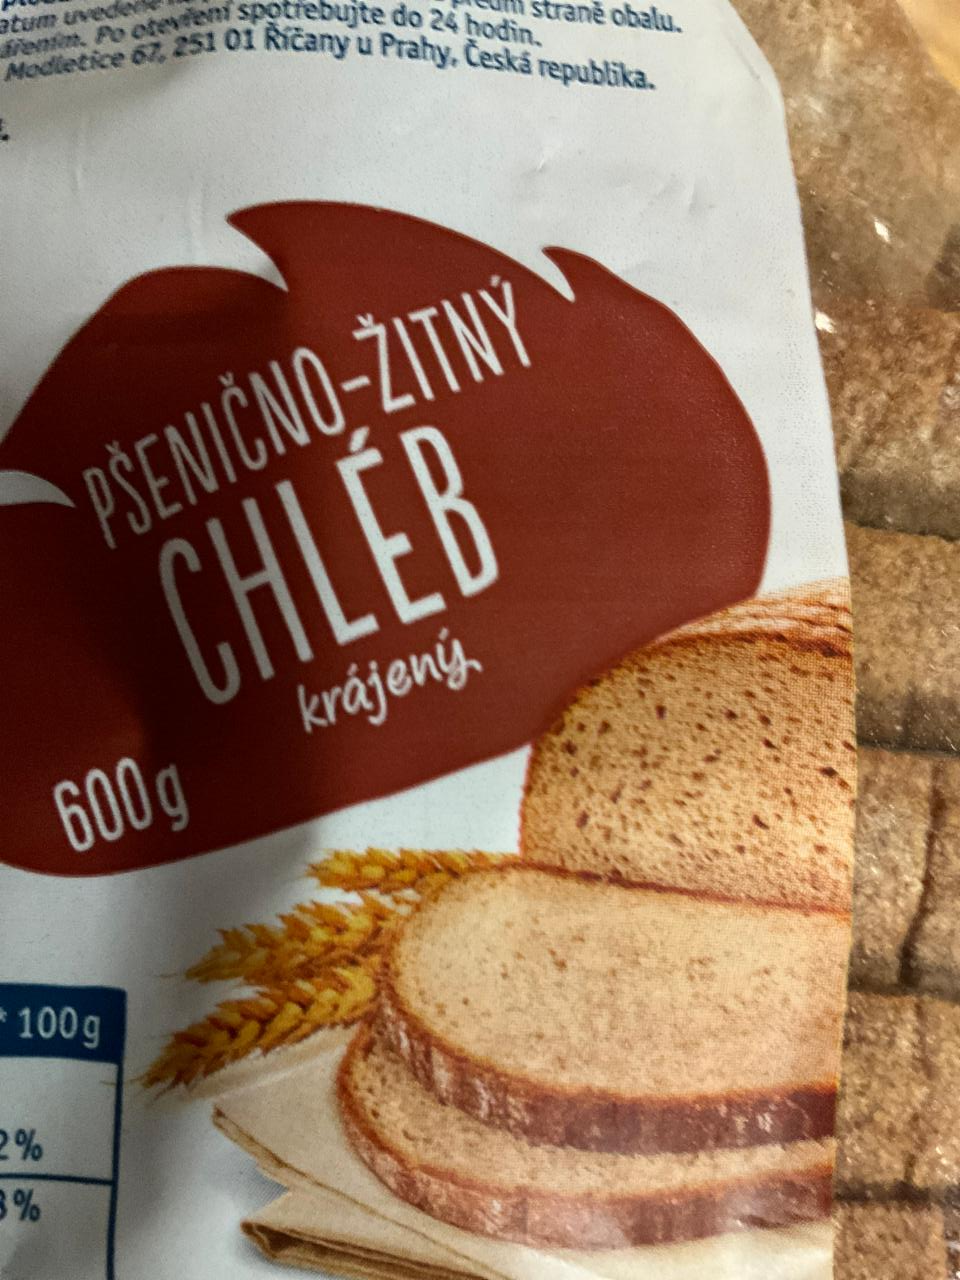 Fotografie - Pšenično-žitný chléb krájený Clever